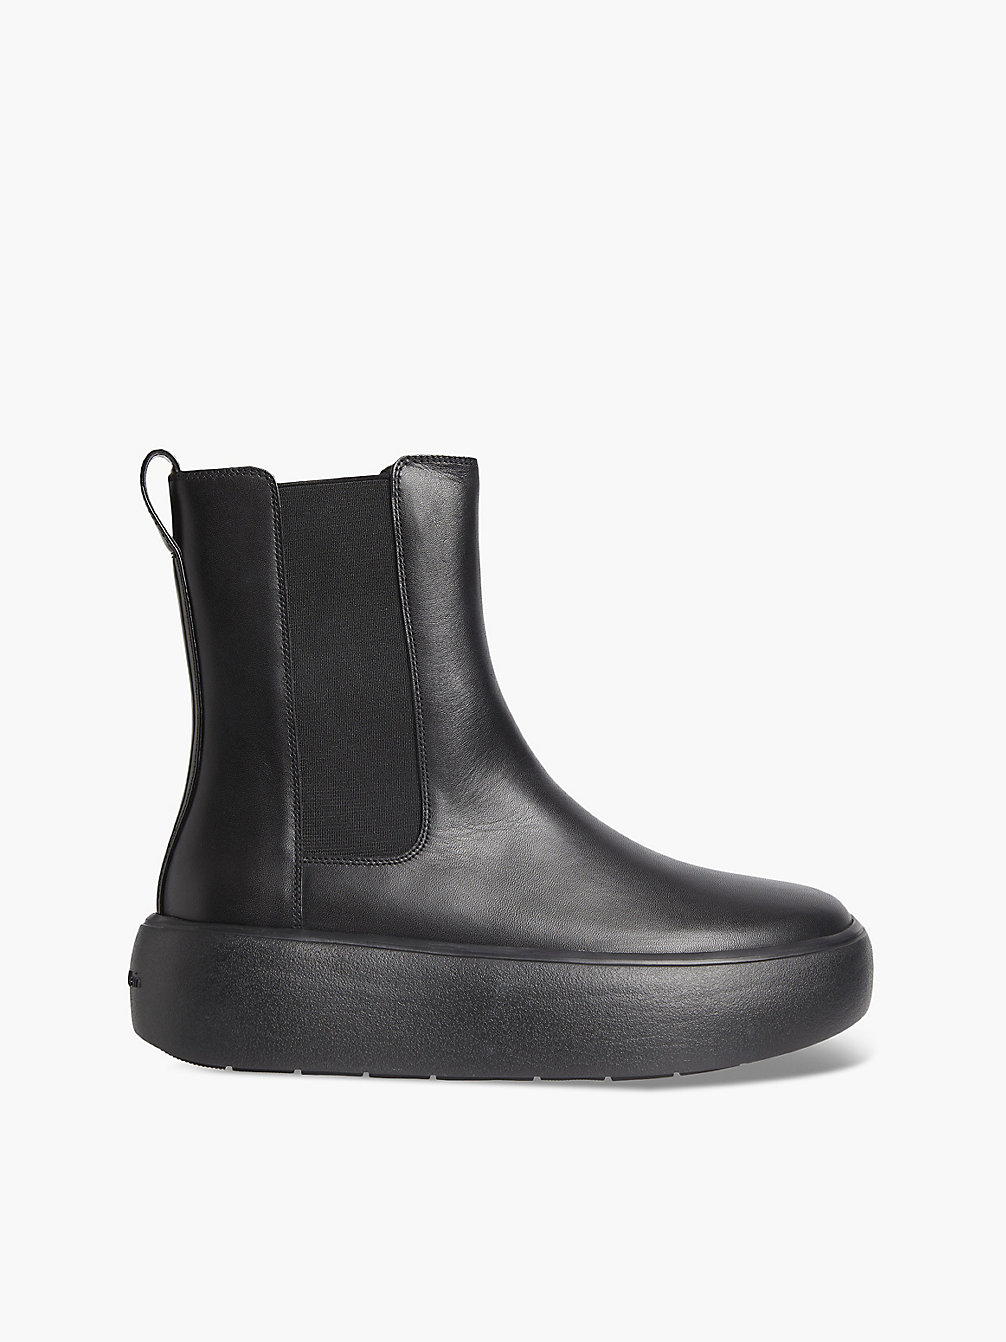 TRIPLE BLACK > Кожаные ботинки Челси на пузырьковой платформе > undefined Женщины - Calvin Klein